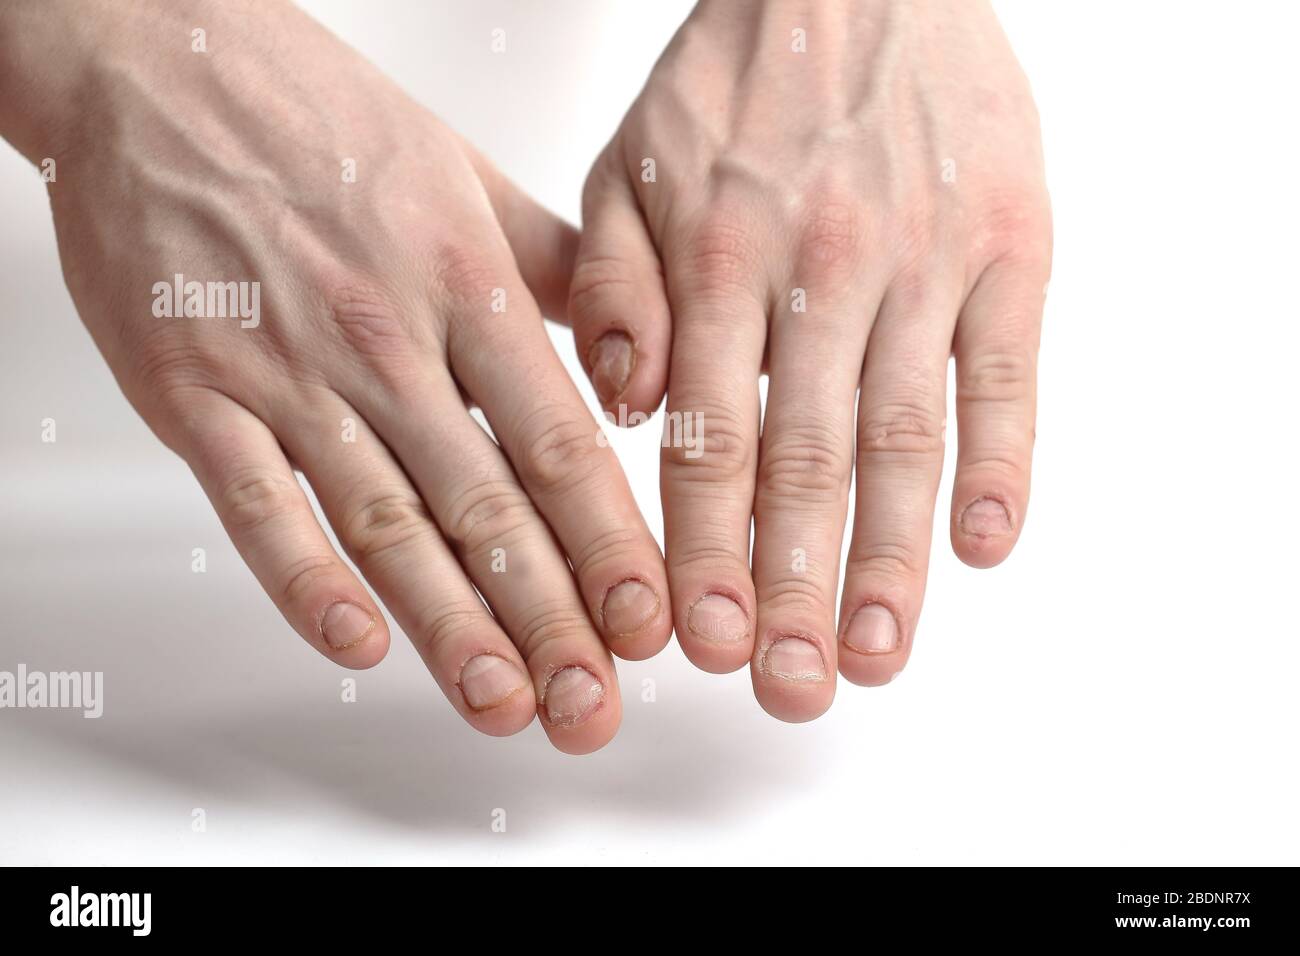 Nail Fungus Treatment for Toenail, Toenail Fungus Treatment: Fungus Nail  Treatment For Toenail & Fingernails, Toe Nail Fungus Treatment Extra  Strength, for Athletes Foot, Discolored or Damaged Nails – The Oxford Foot